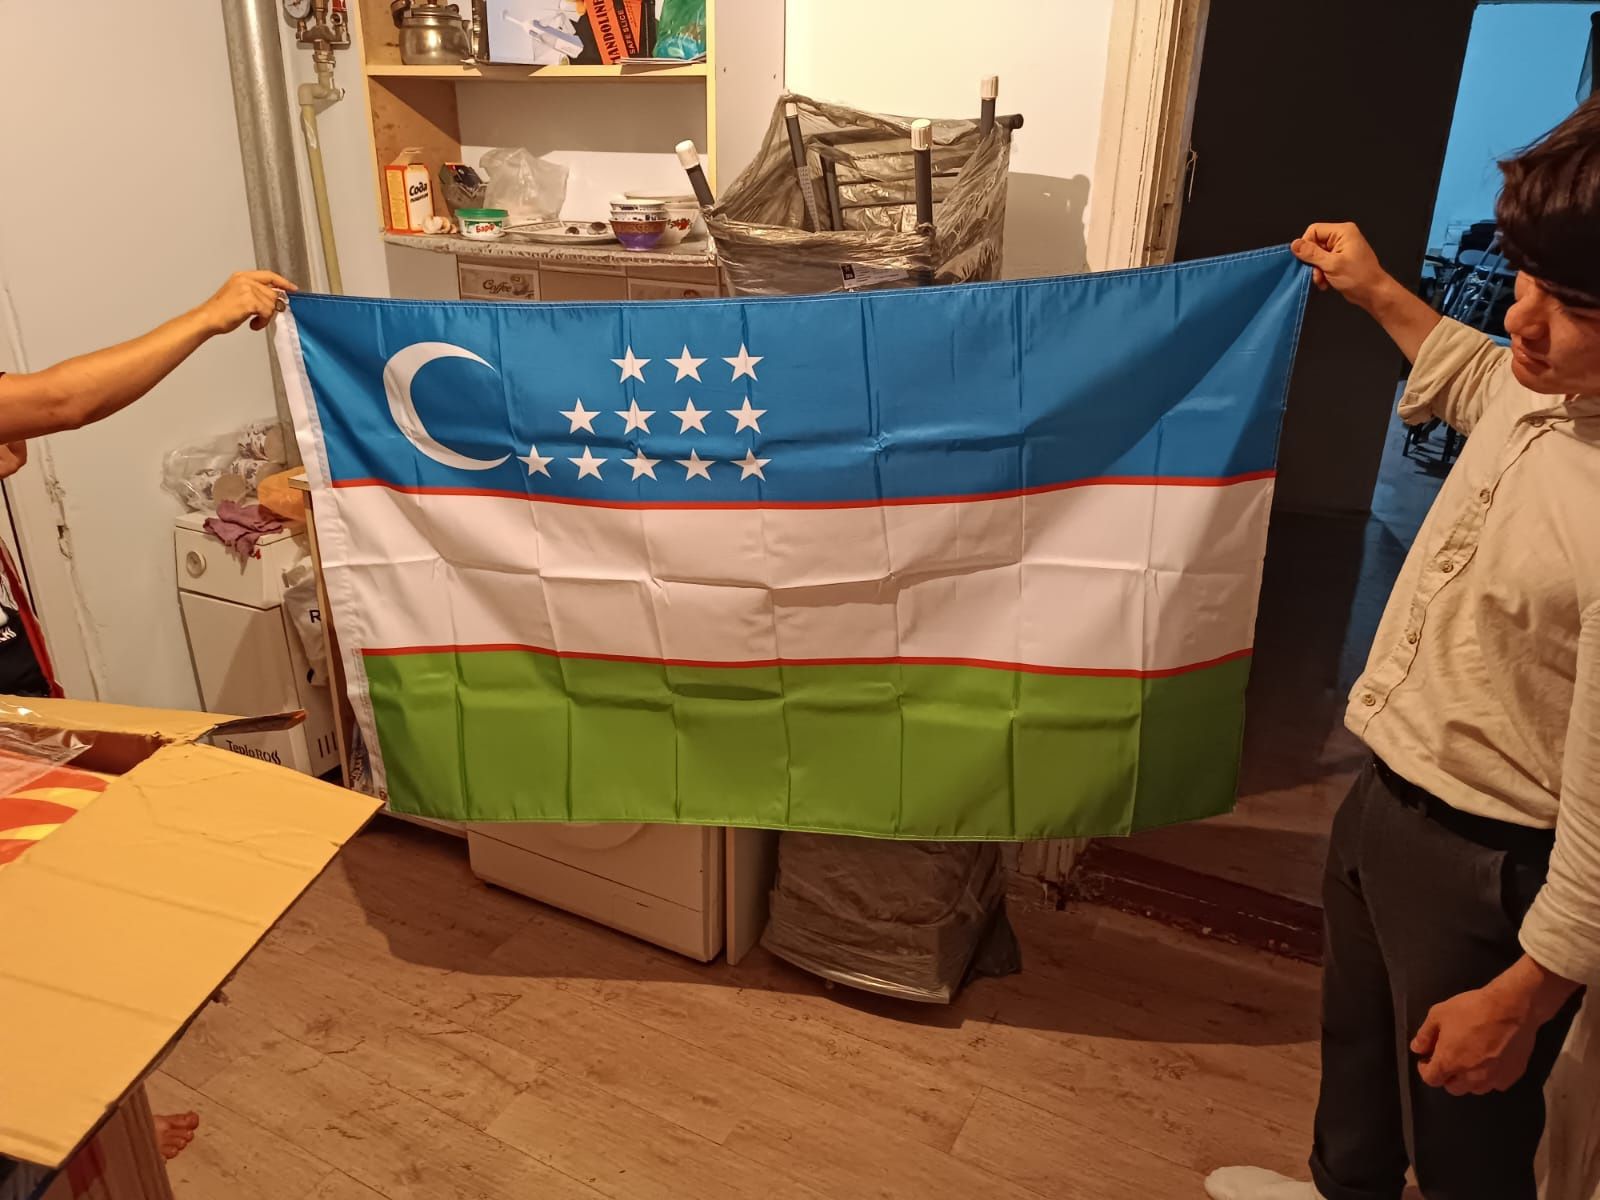 Флаг казакстан кыргызстан